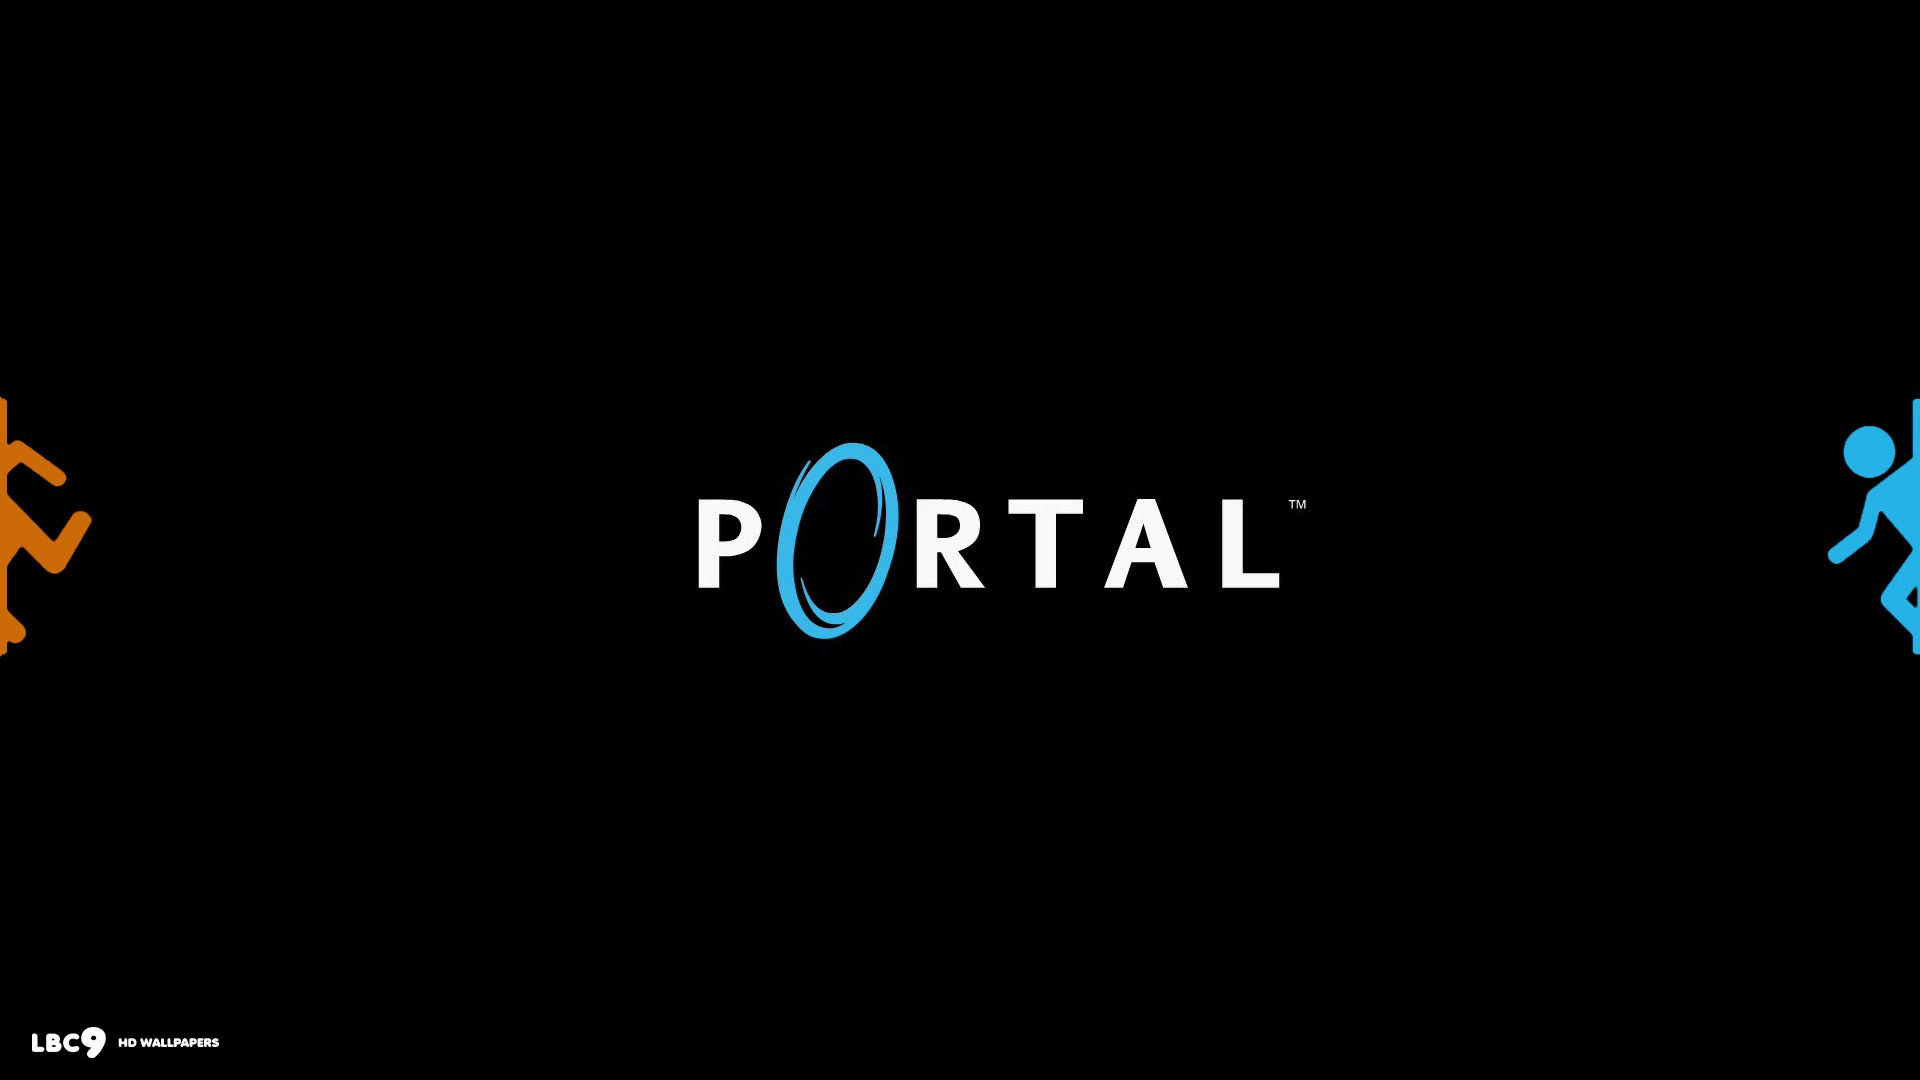 Portal backgrounds